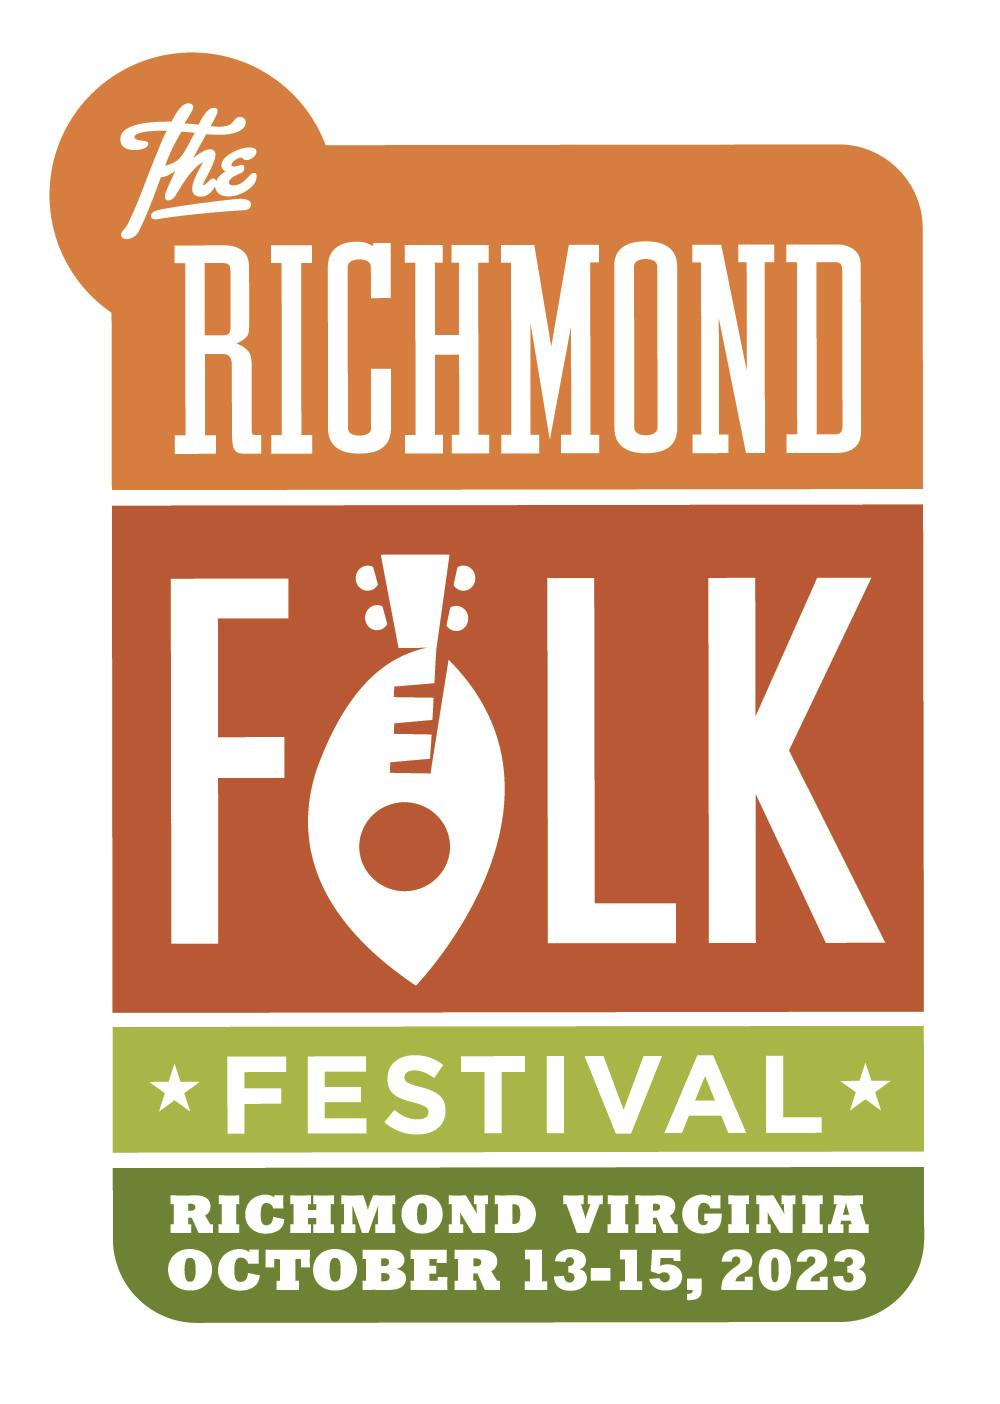 Richmond Folk Festival